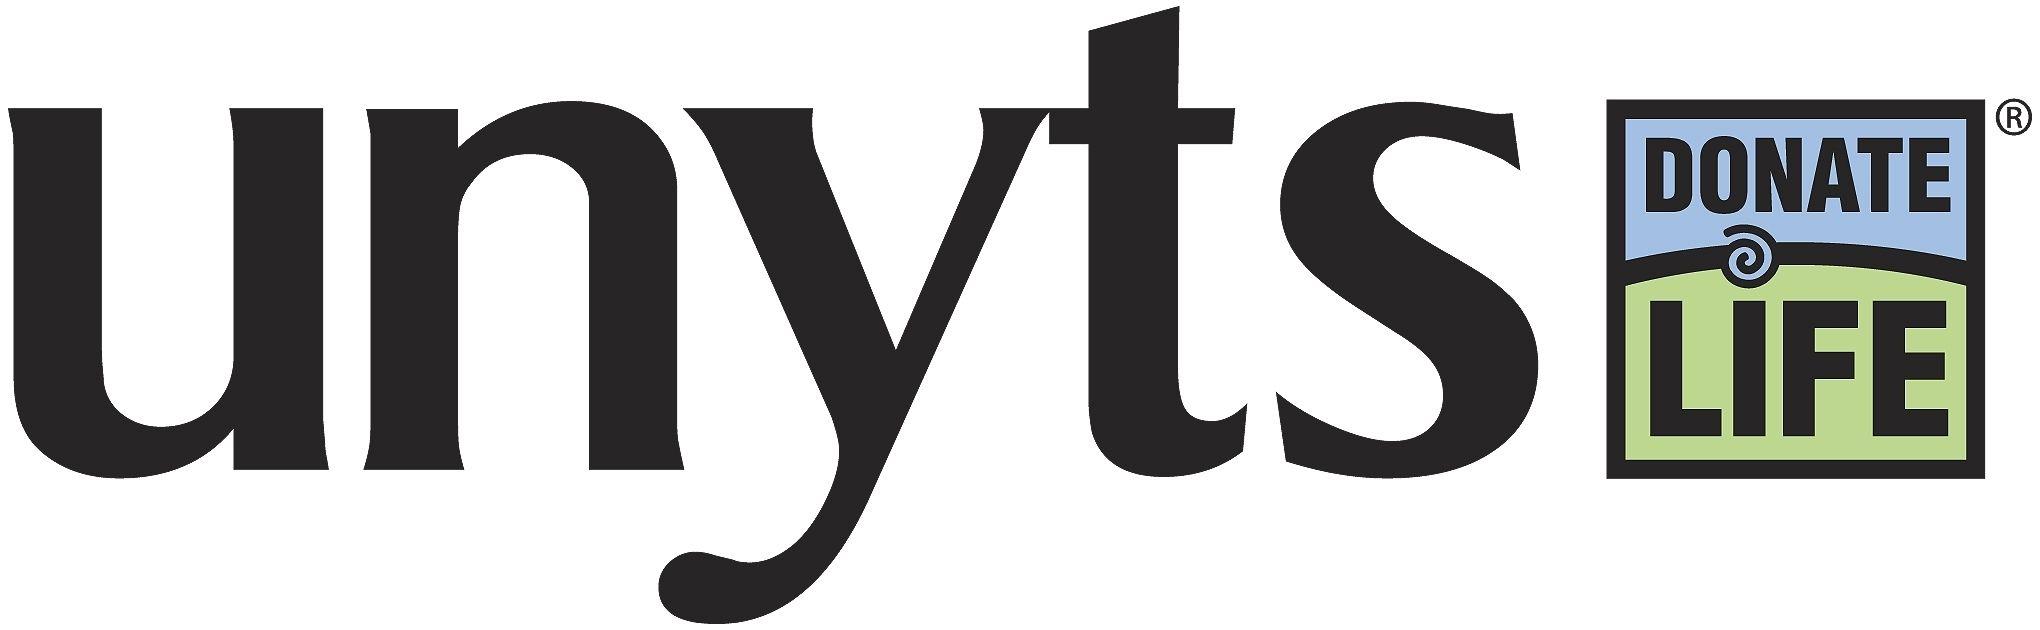 Unyts Logo - Unyts Logo. Villa Maria College